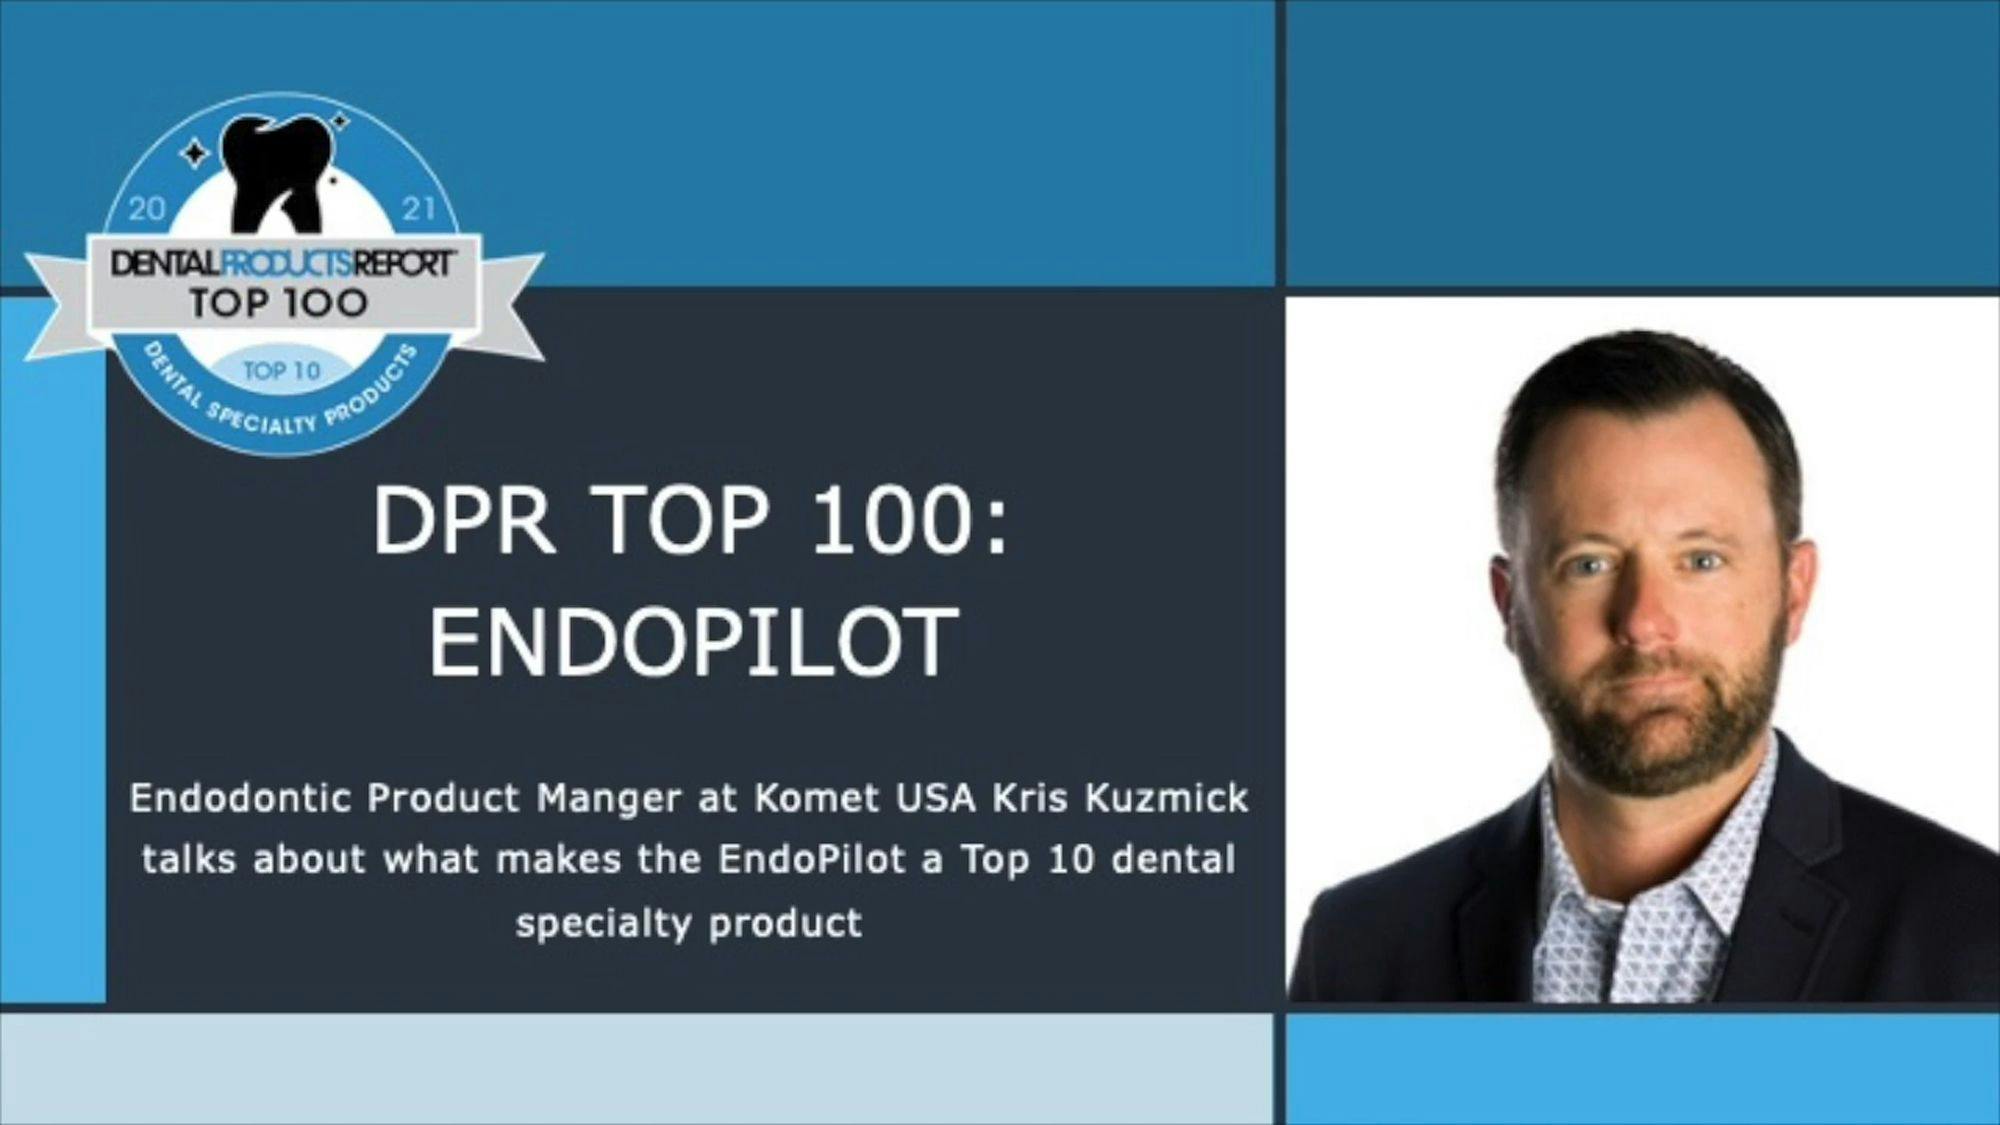 DPR Top 100: EndoPilot from Komet USA